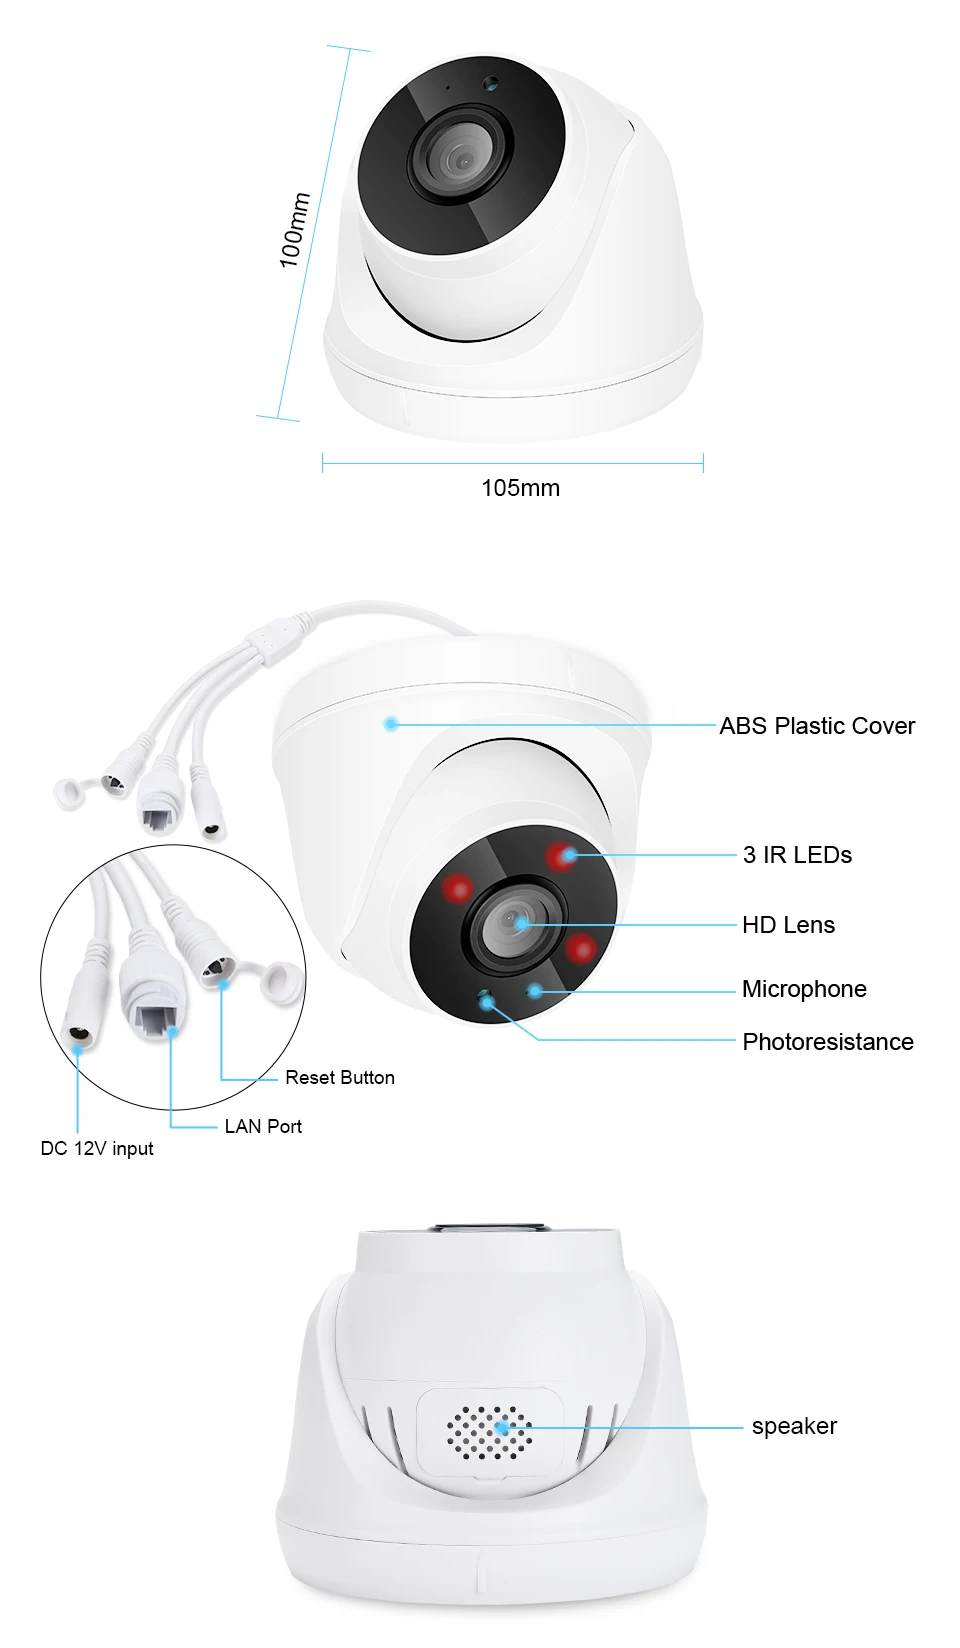 ANRAN домашняя Wifi камера безопасности, домашняя беспроводная система видеонаблюдения, 1080P HD аудио CCTV камера, 8 CH NVR набор